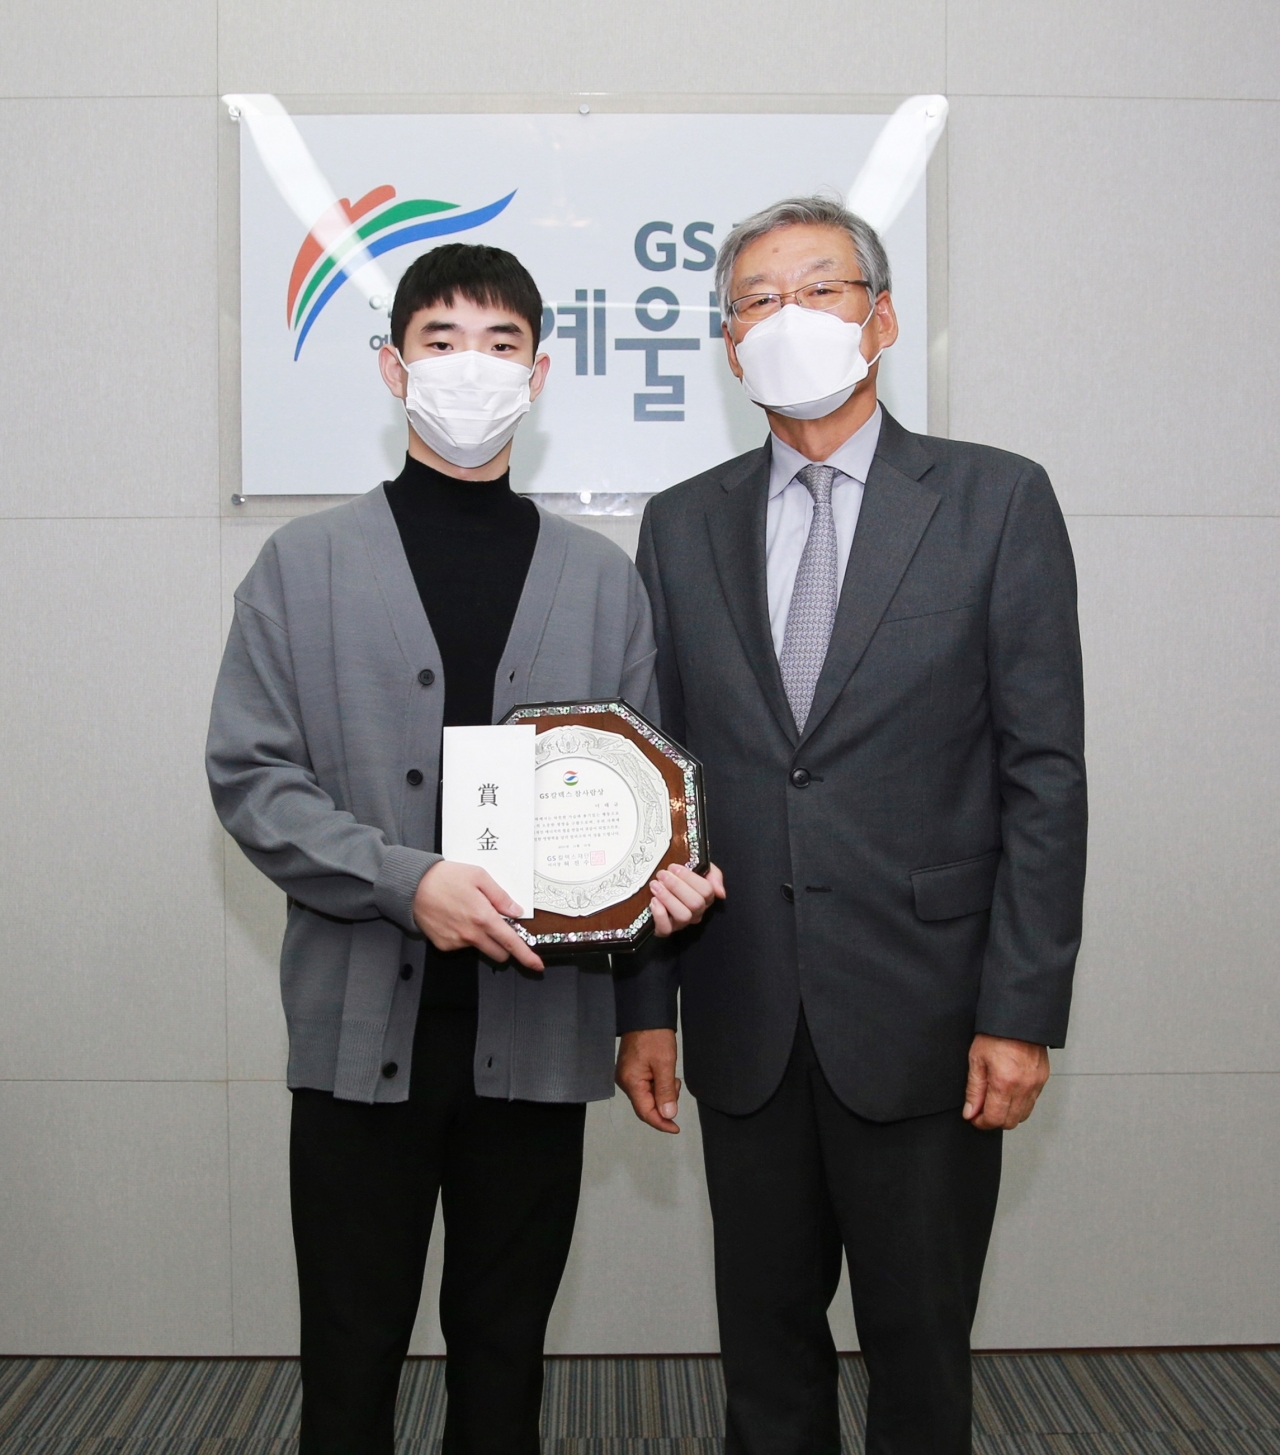 GS칼텍스 참사람상을 첫 번째로 수상한 이태규씨가 김기태 GS칼텍스재단 상임이사와 기념사진을 찍고 있다.